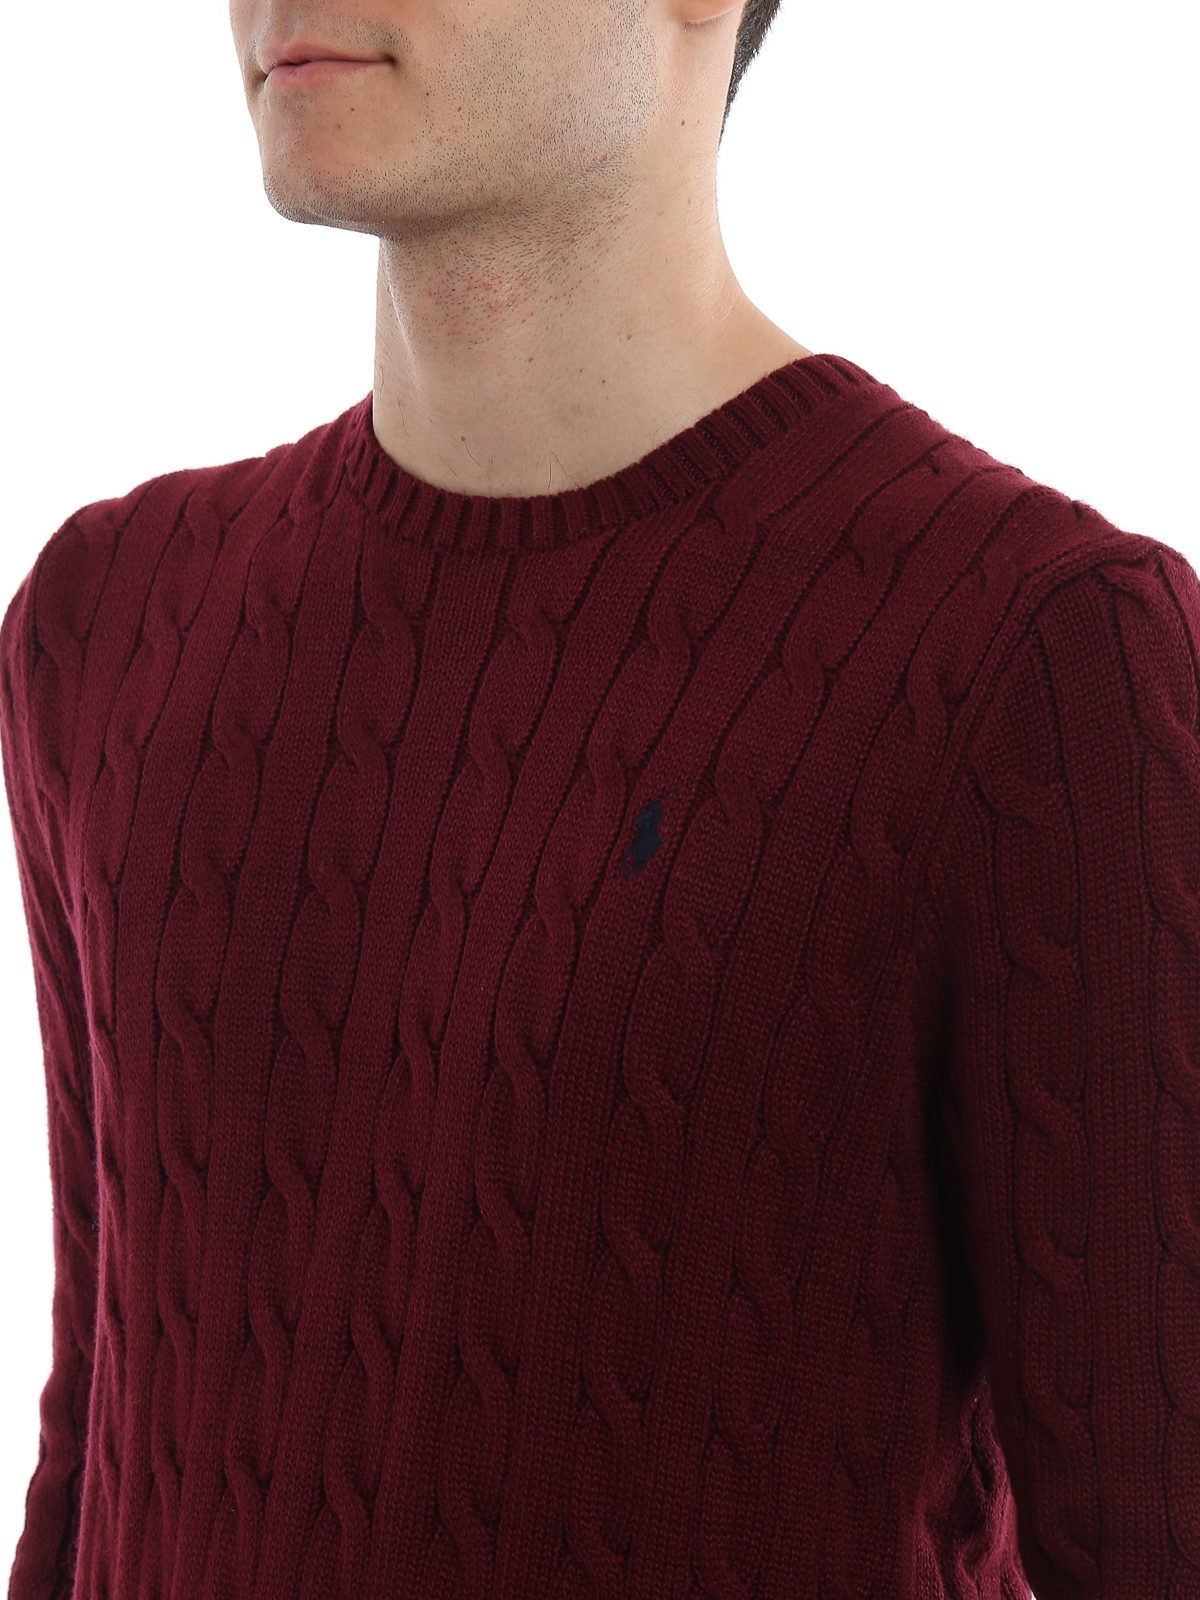 Polo Ralph Lauren - Burgundy cable knit 